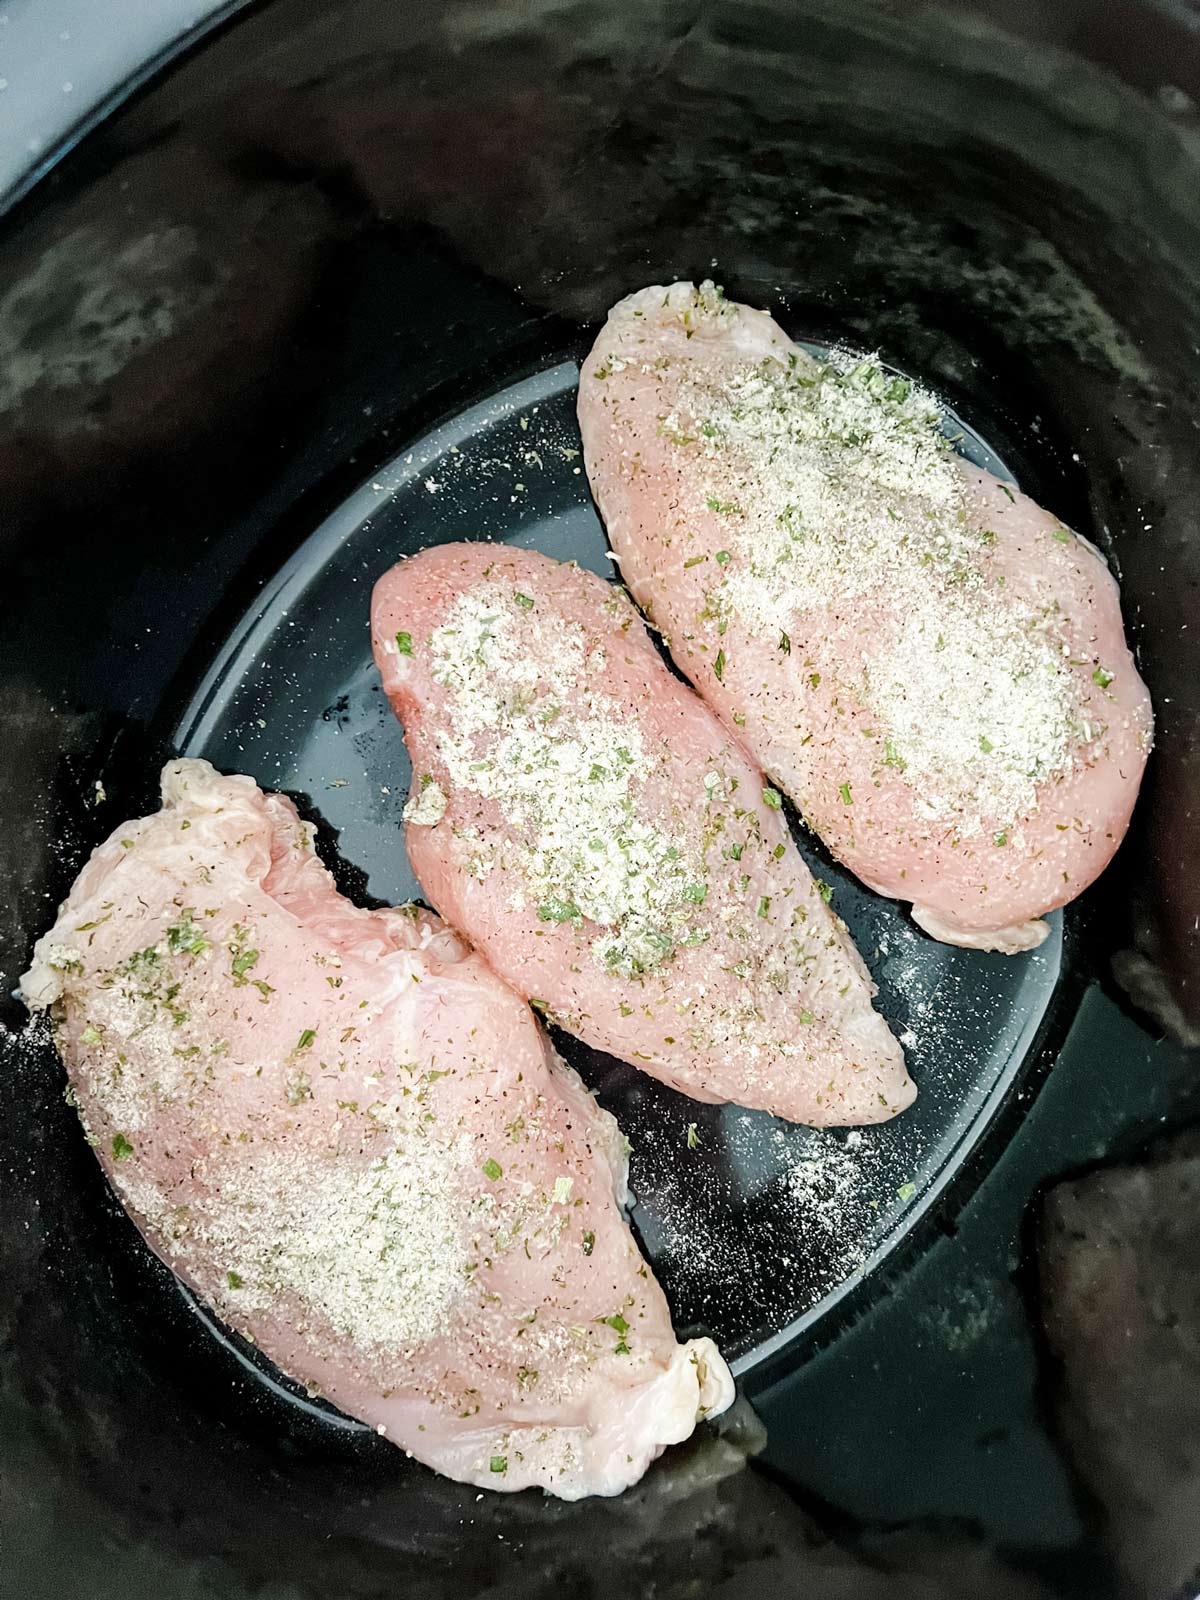 Ranch seasoning chicken breast in a crockpot.